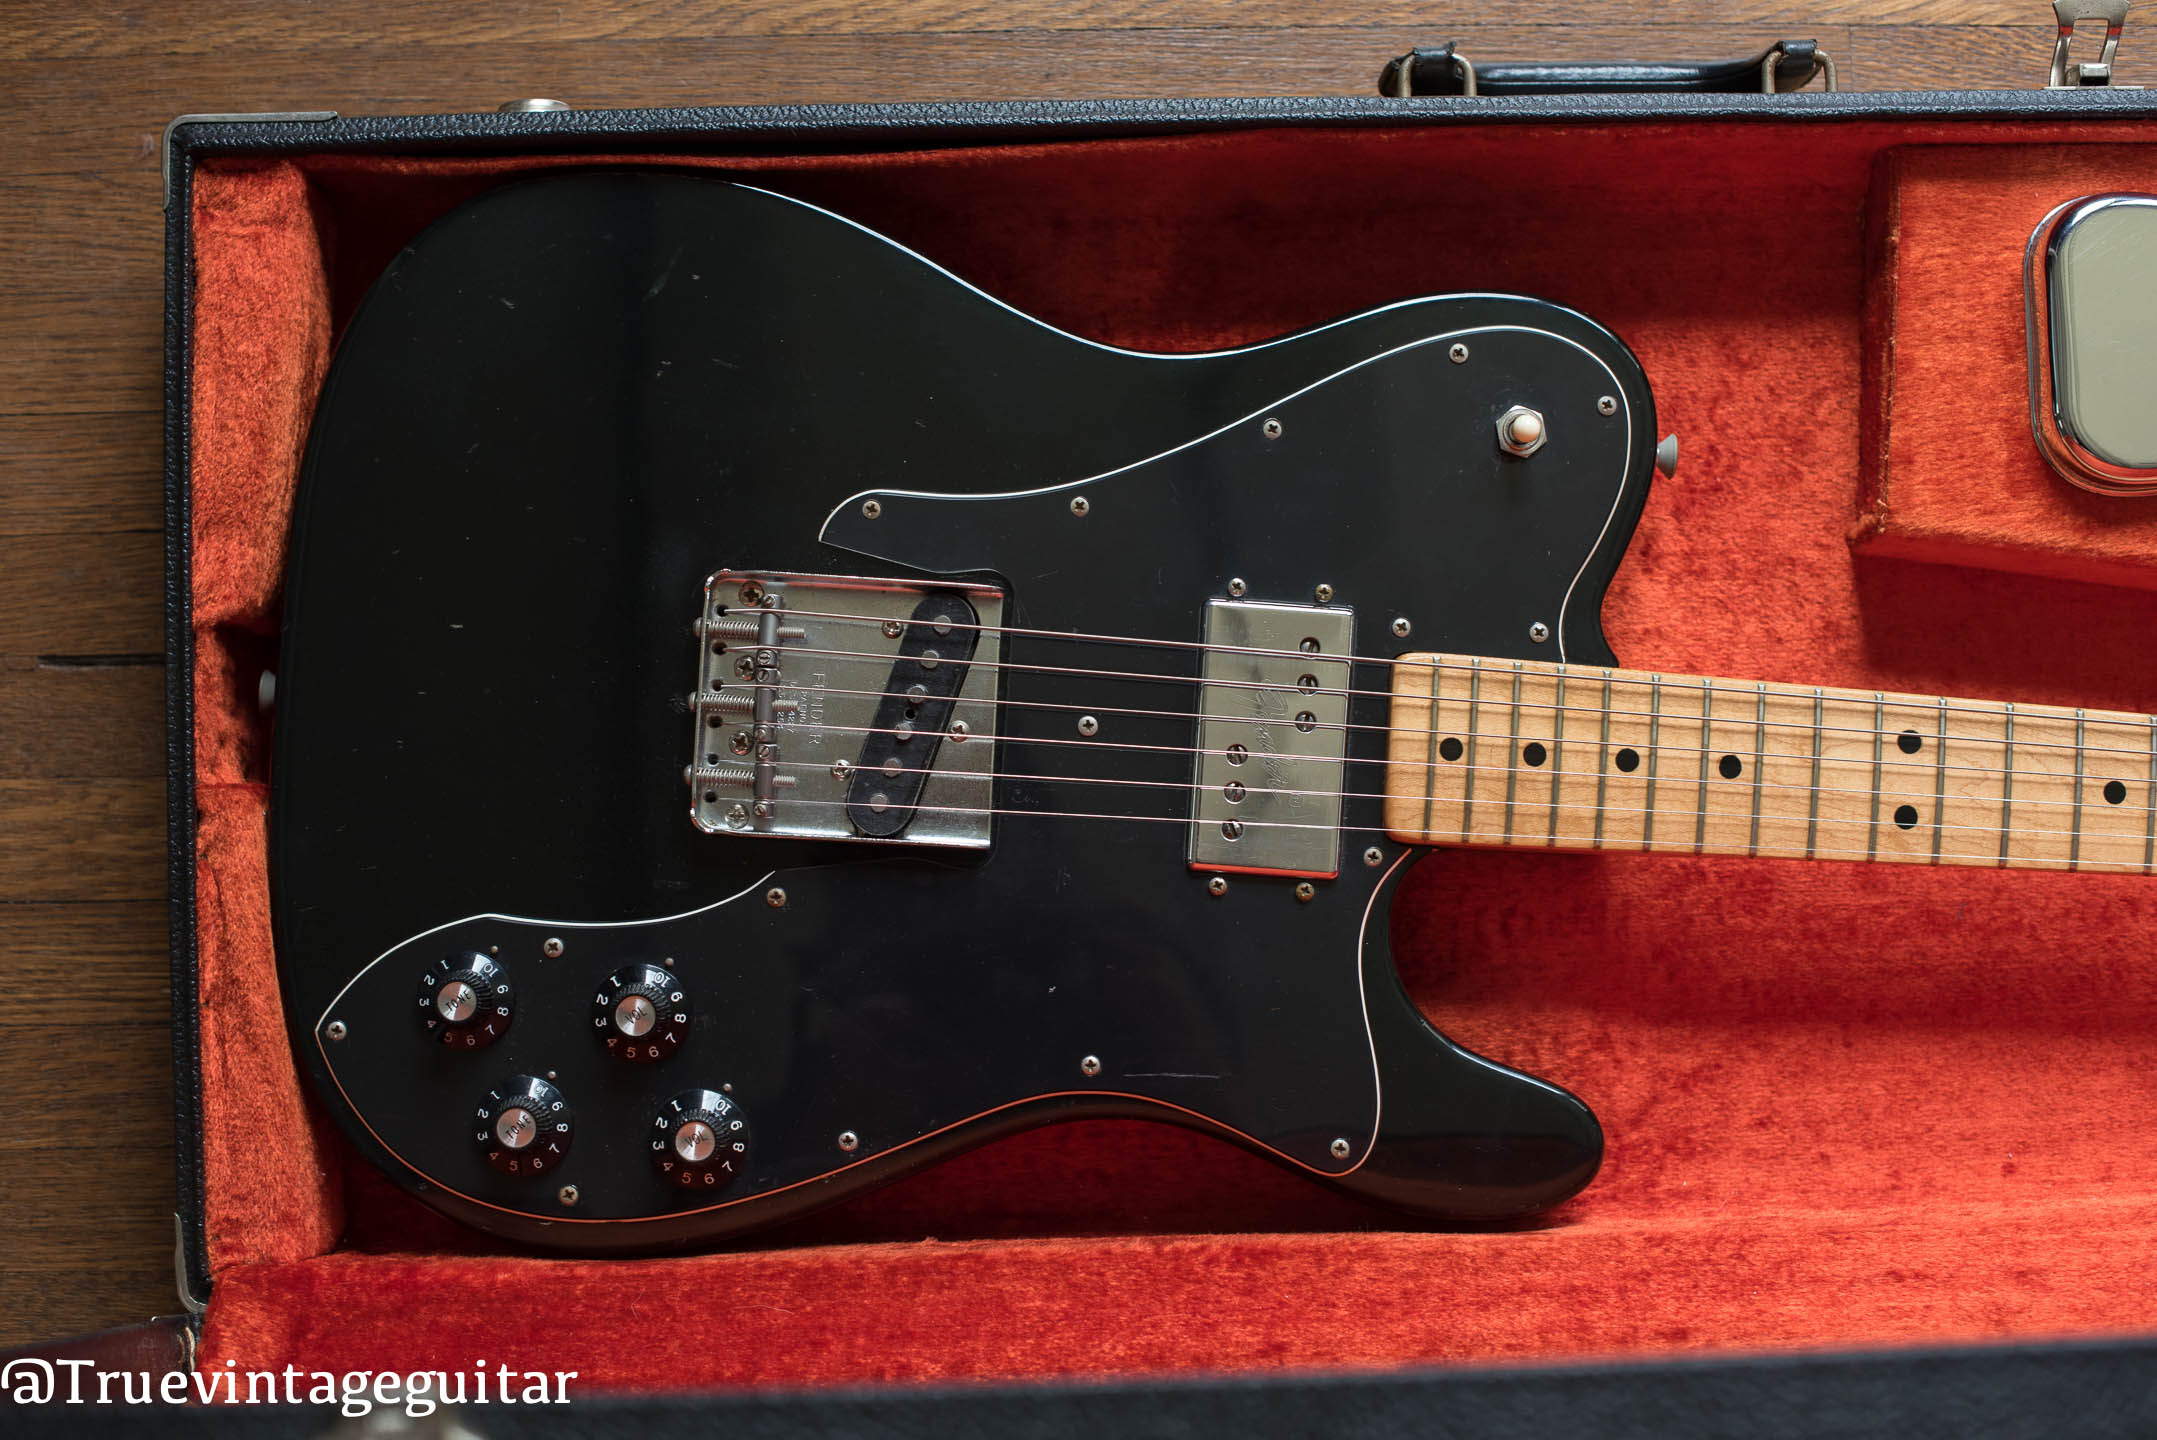 Vintage 1973 Fender Telecaster Custom Black guitar